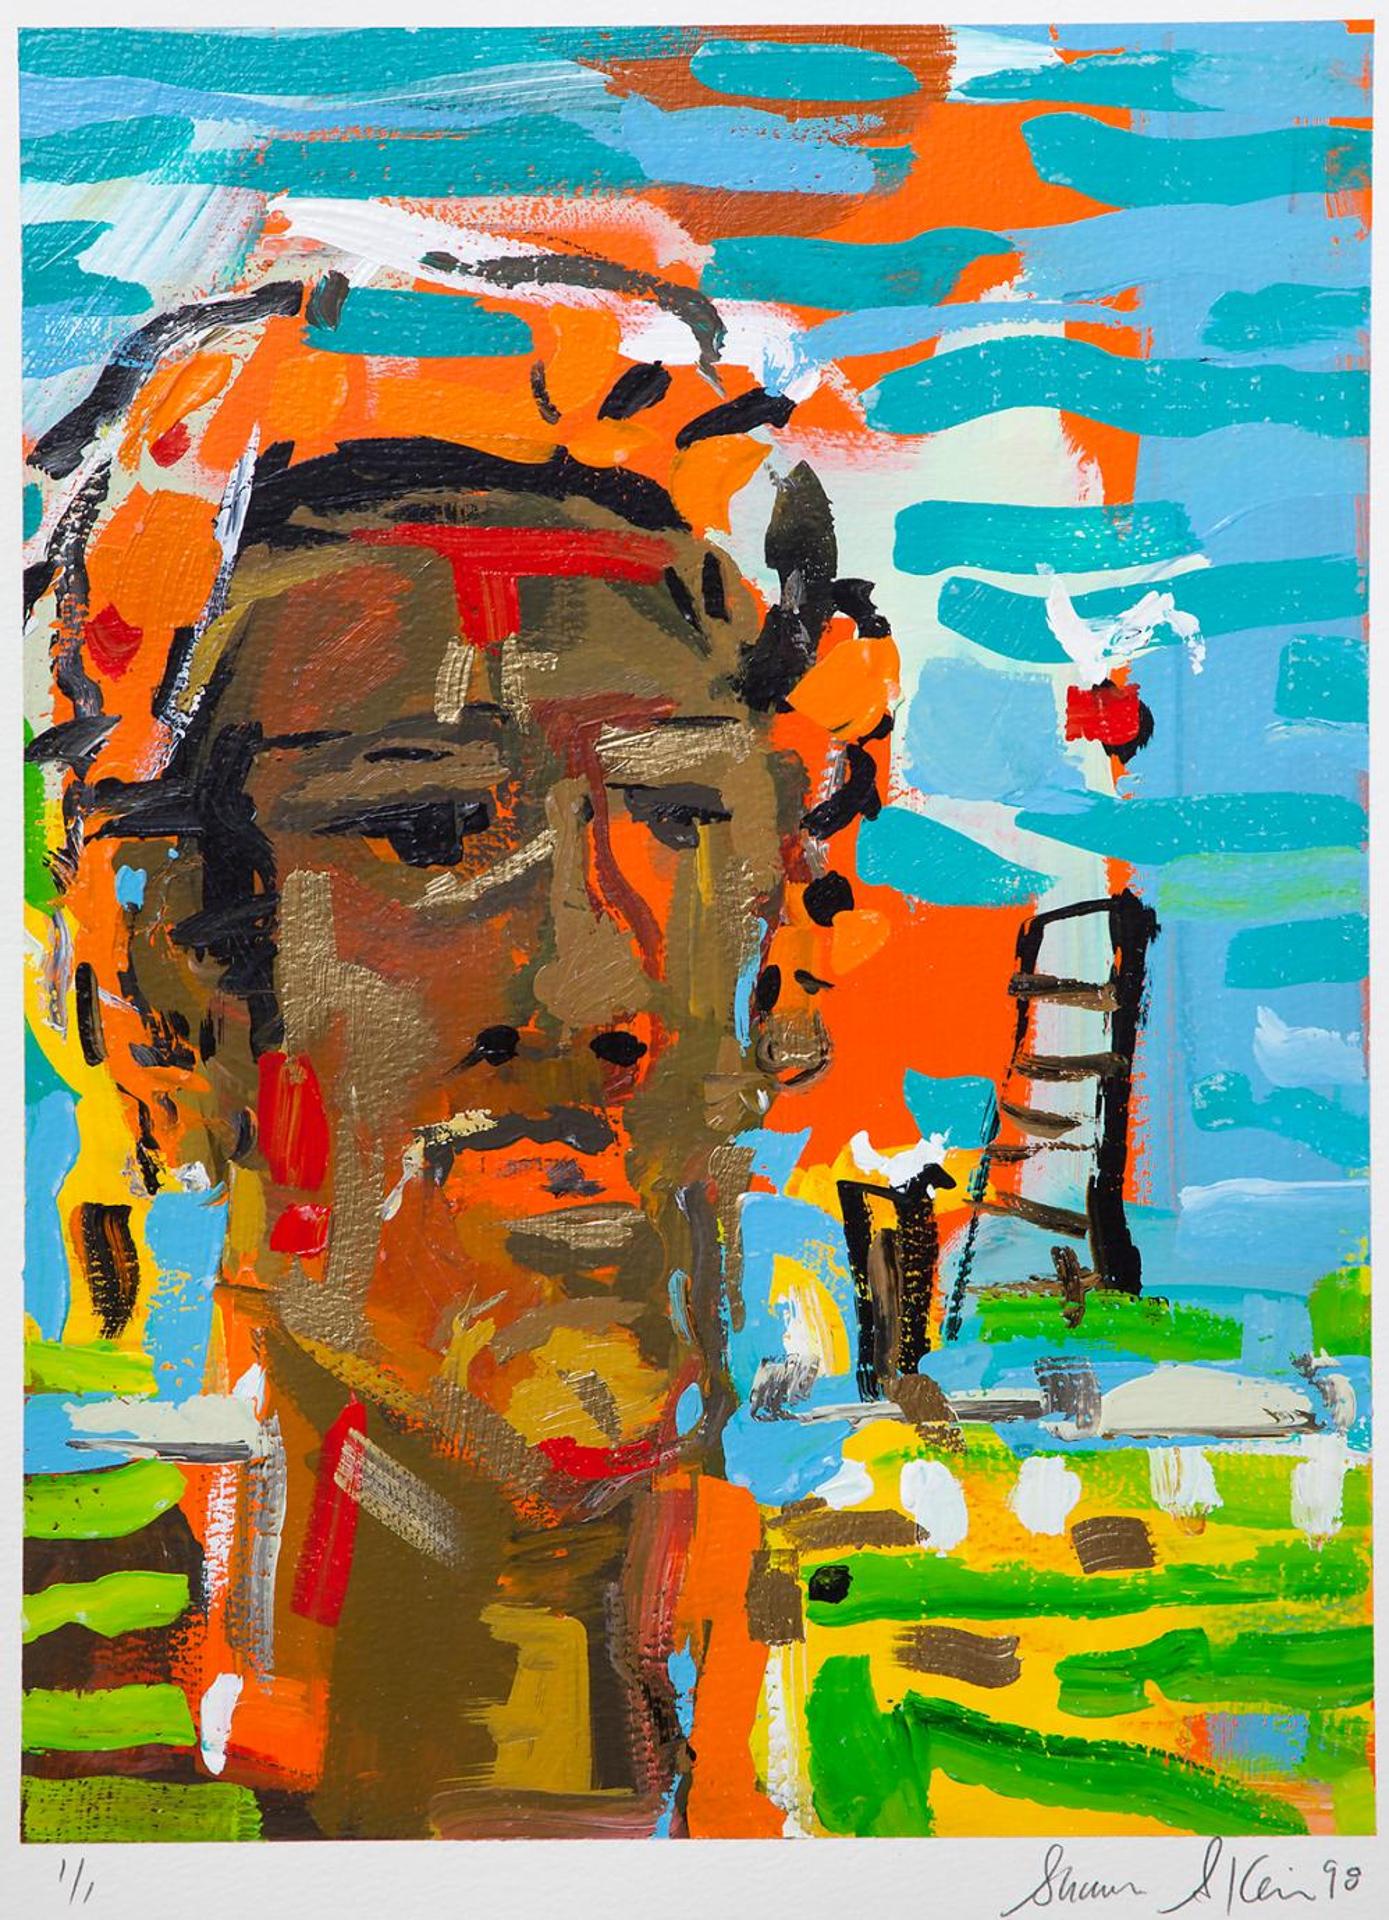 Shawn Skeir (1965) - Untitled - Portrait